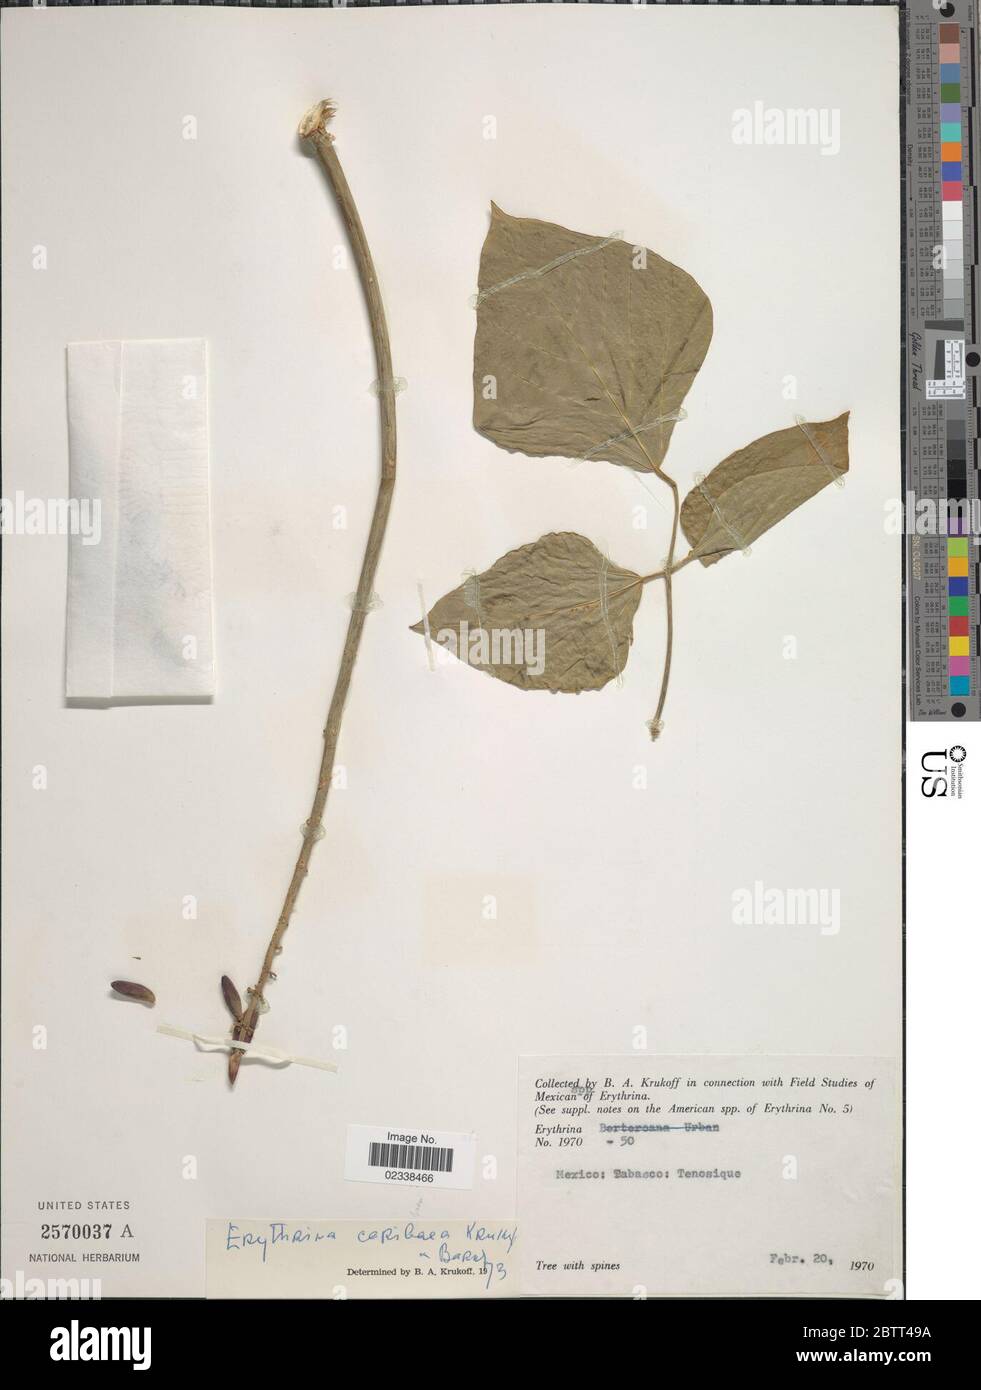 Erythrina caribaea Krukoff Barneby. Stock Photo